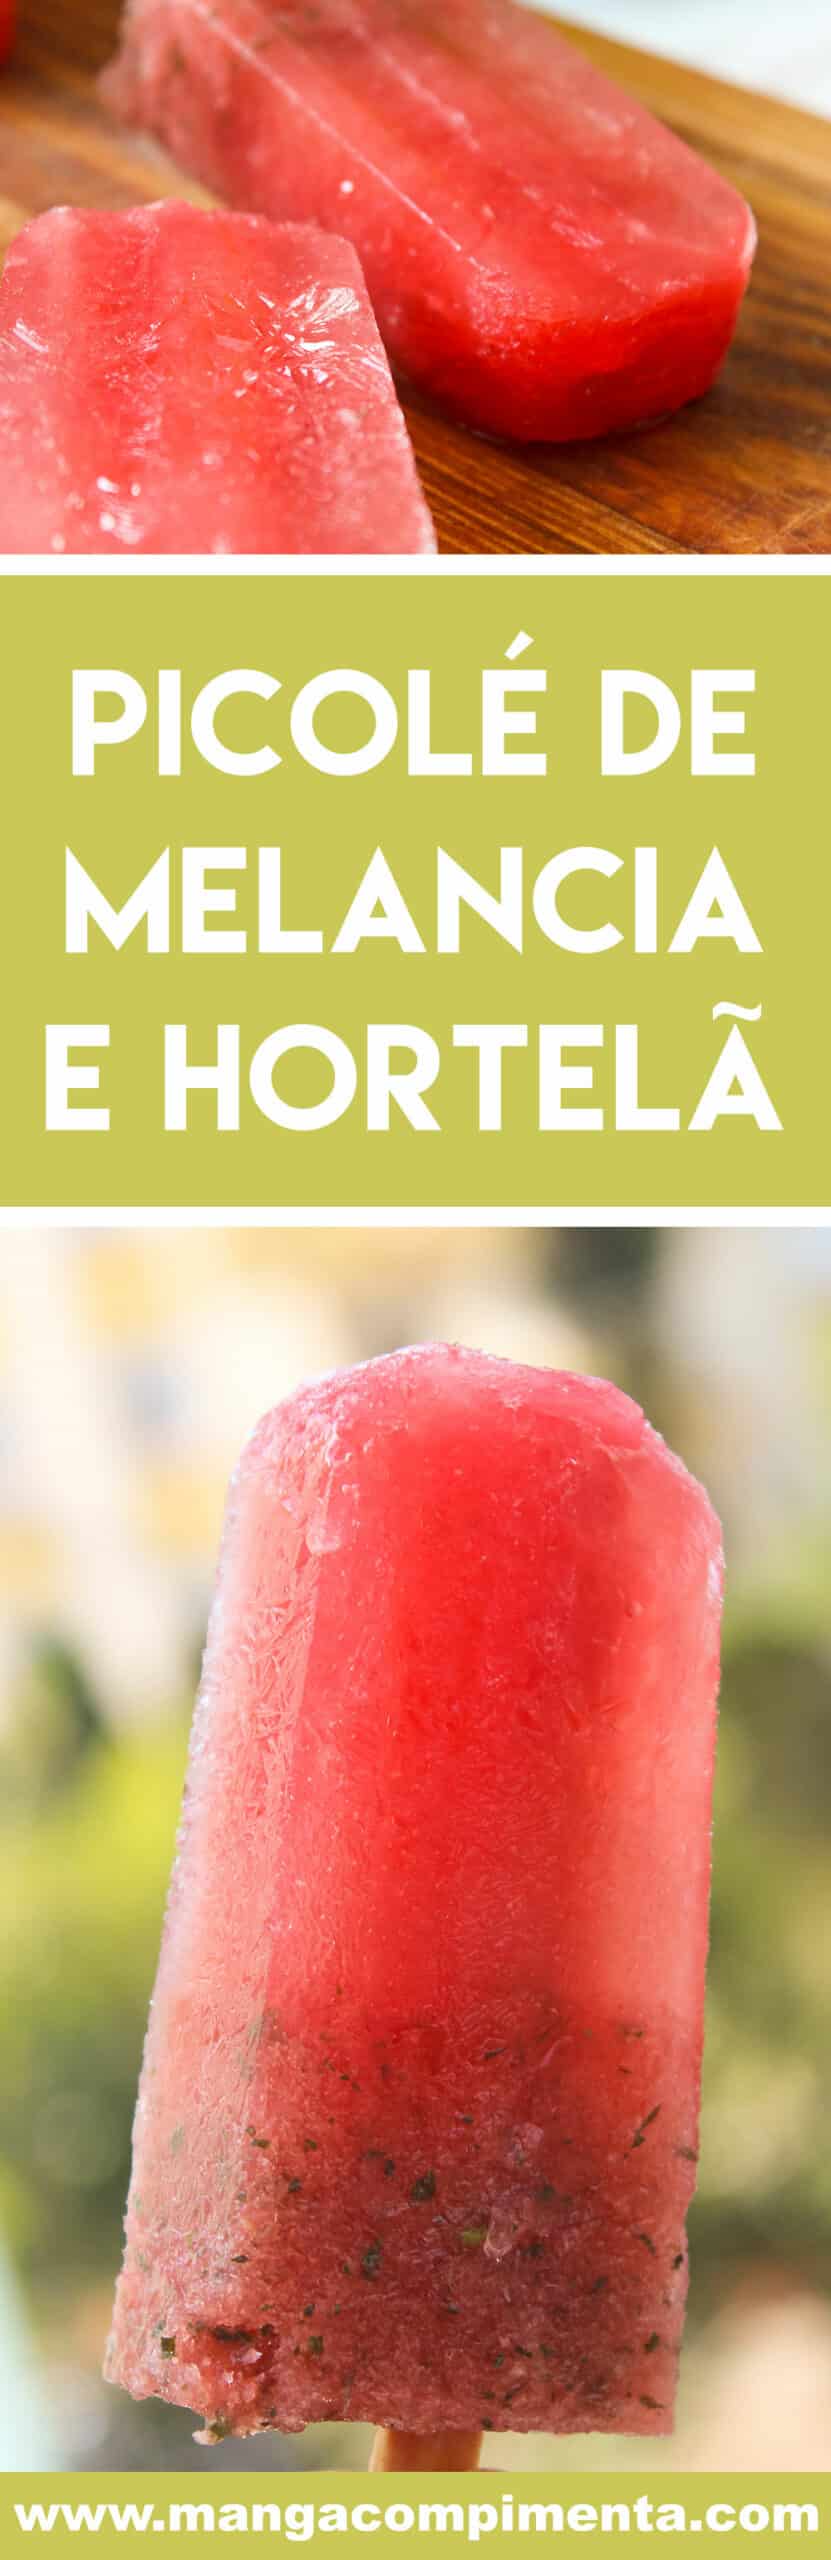 Receita de Picolé de Melancia e Hortelã - fácil de preparar e perfeito para espantar o calor para lá.